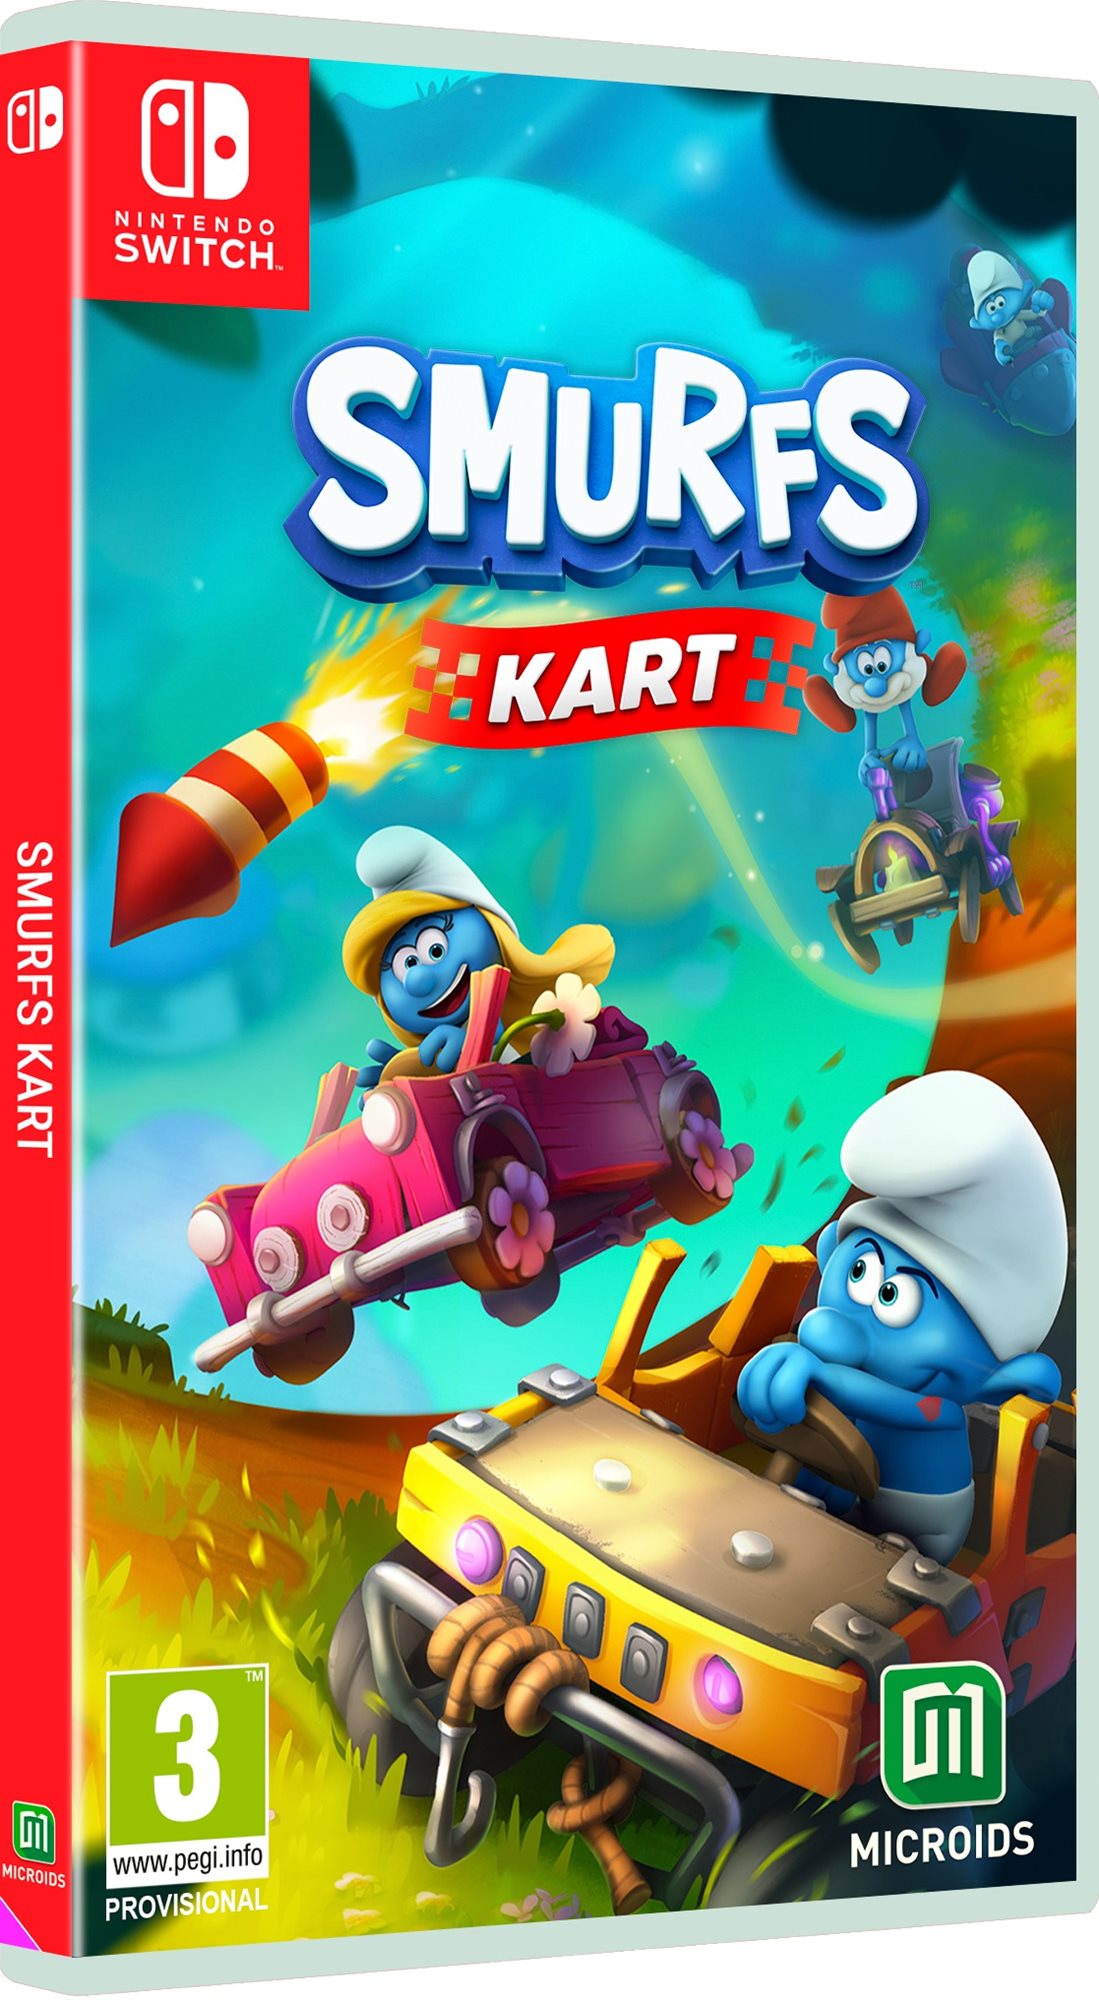 Konzol játék Smurfs Kart Turbo Edition - Nintendo Switch